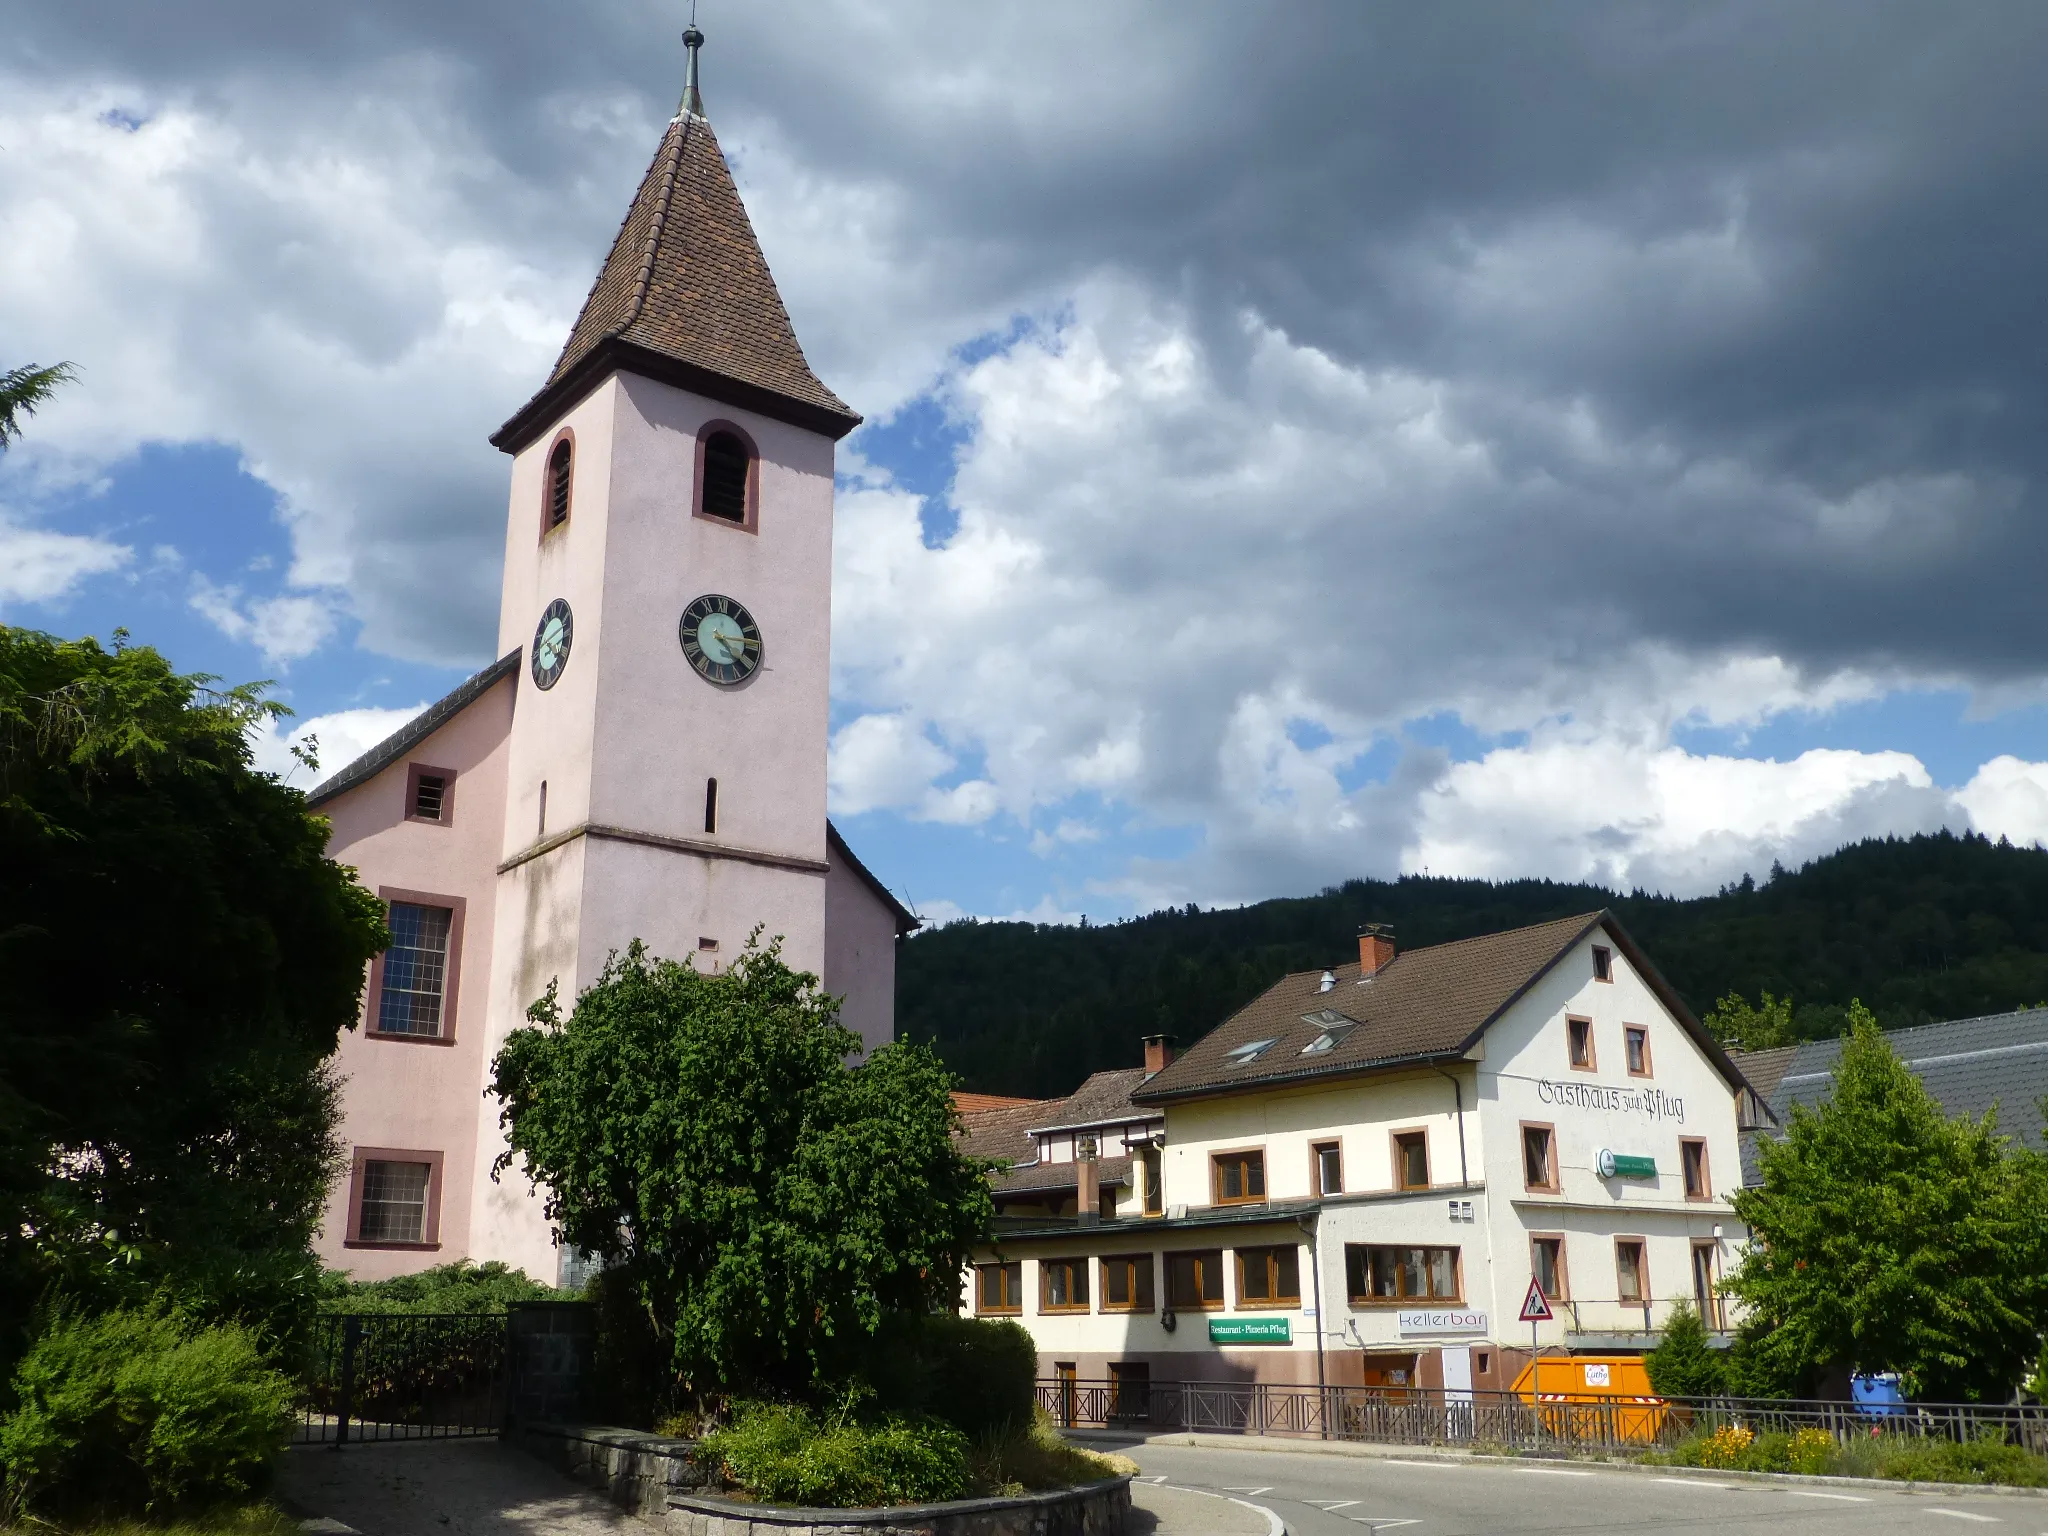 Photo showing: Hasel church and Gasthaus zur Pflug, district Lörrach, Baden